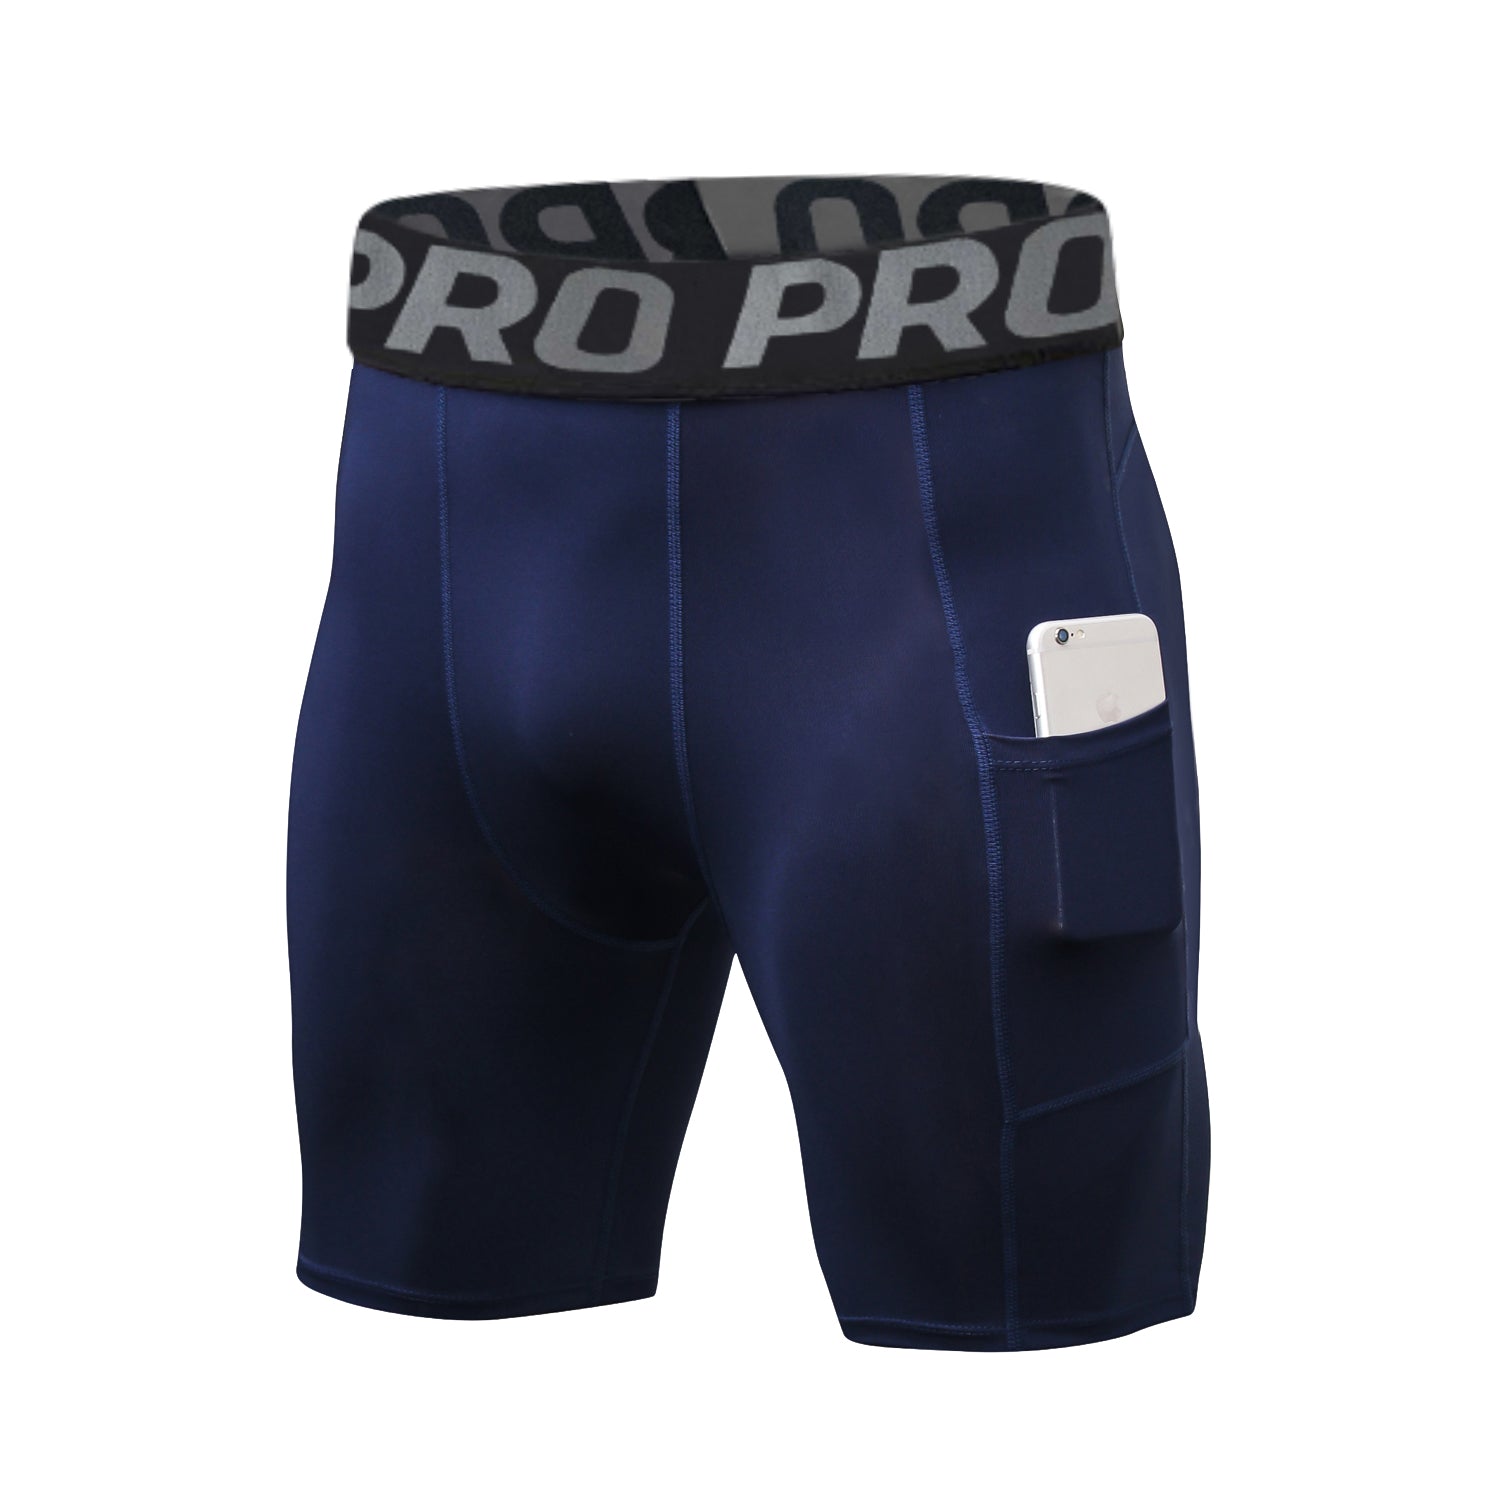 Compression Shorts Men with Pocket Underwear for Men Spandex Running Shorts Workout Cool Dry Workout Underwear LANBAOSI